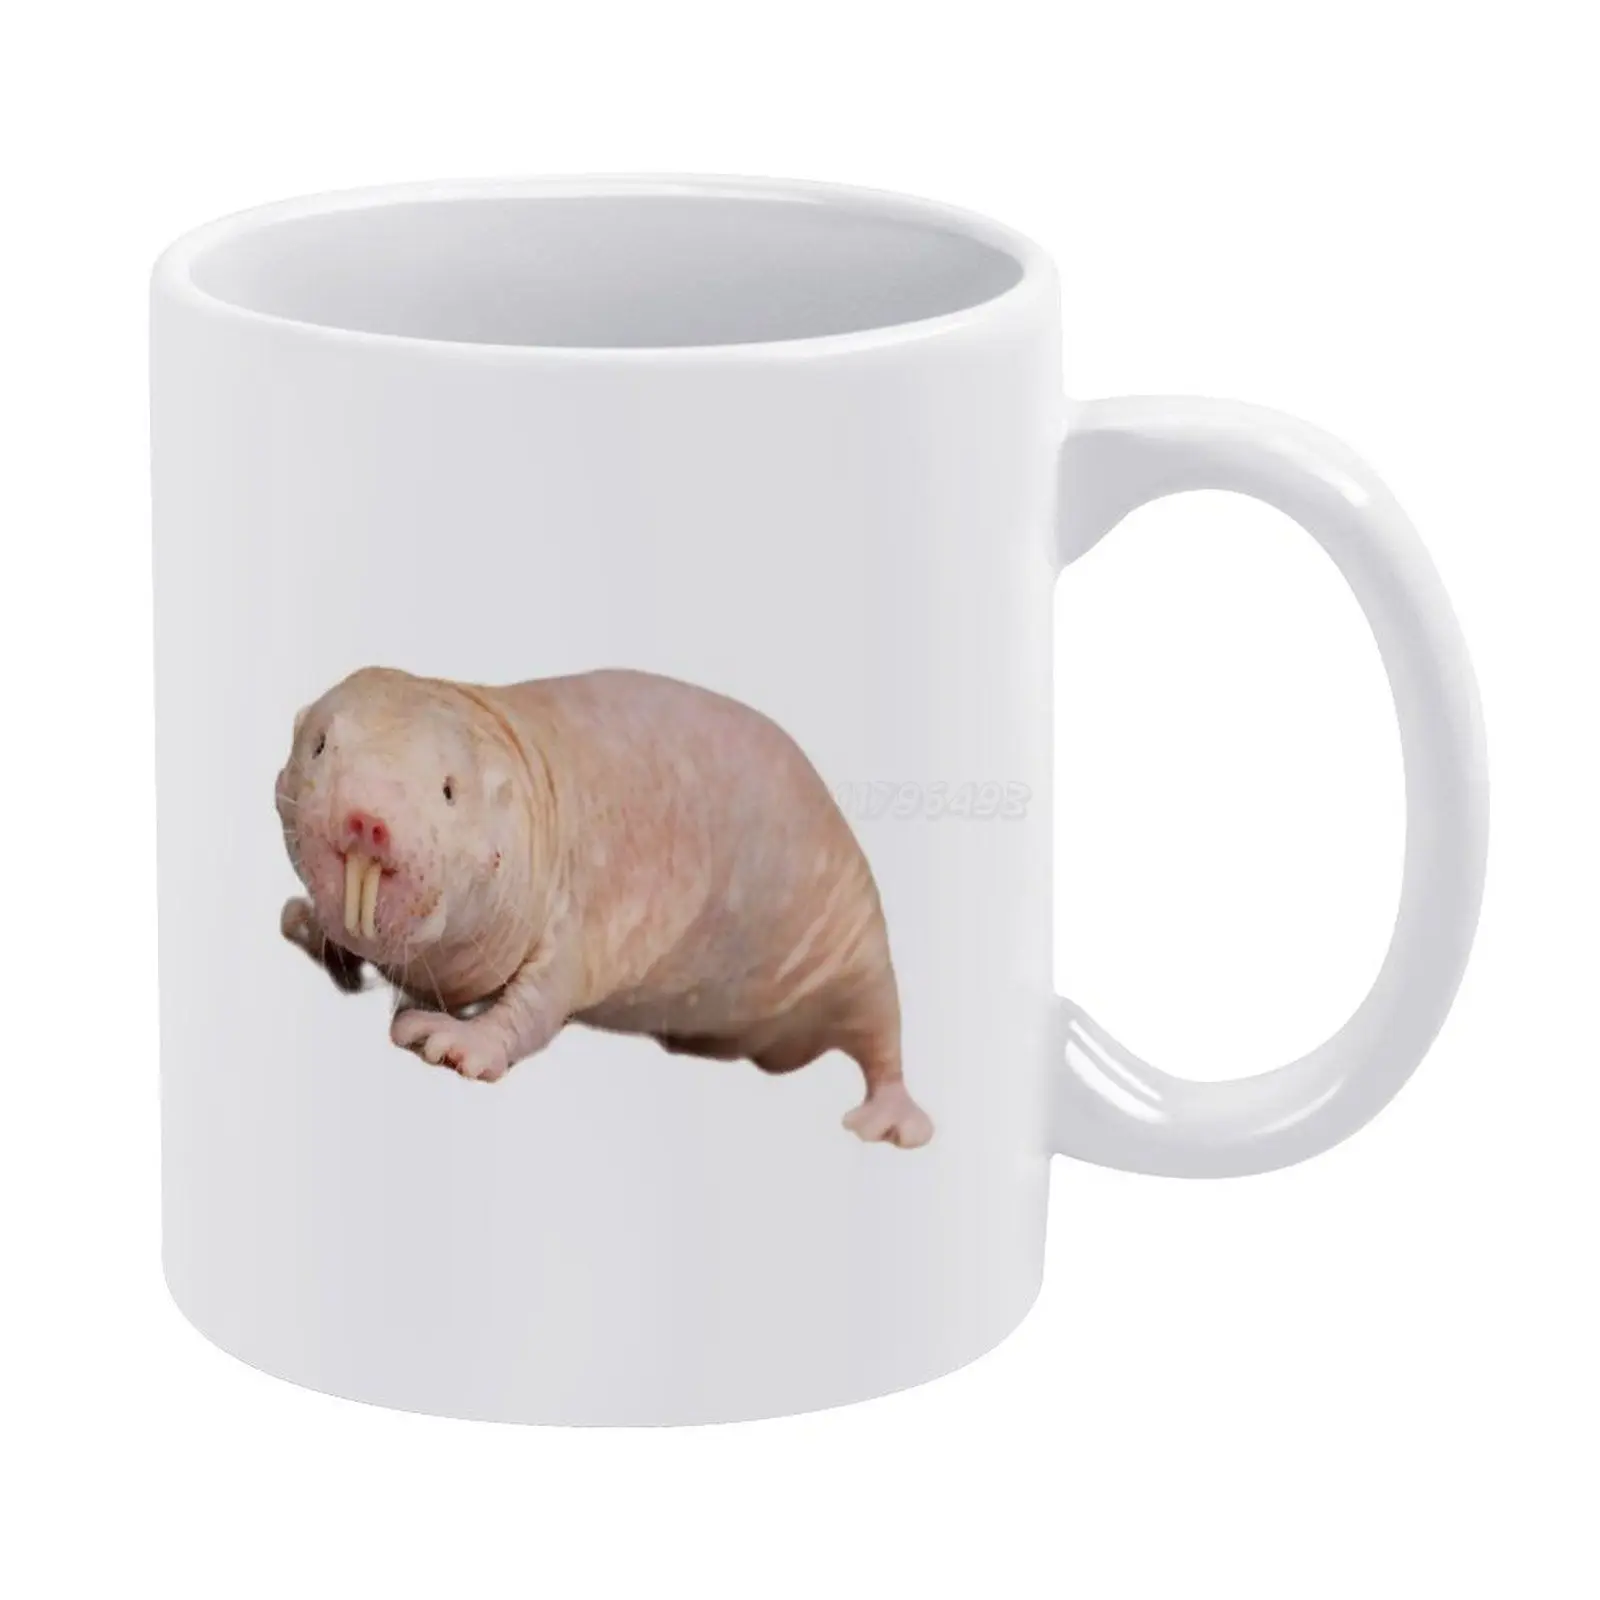 Naked Mole Rat Mug with Color Inside